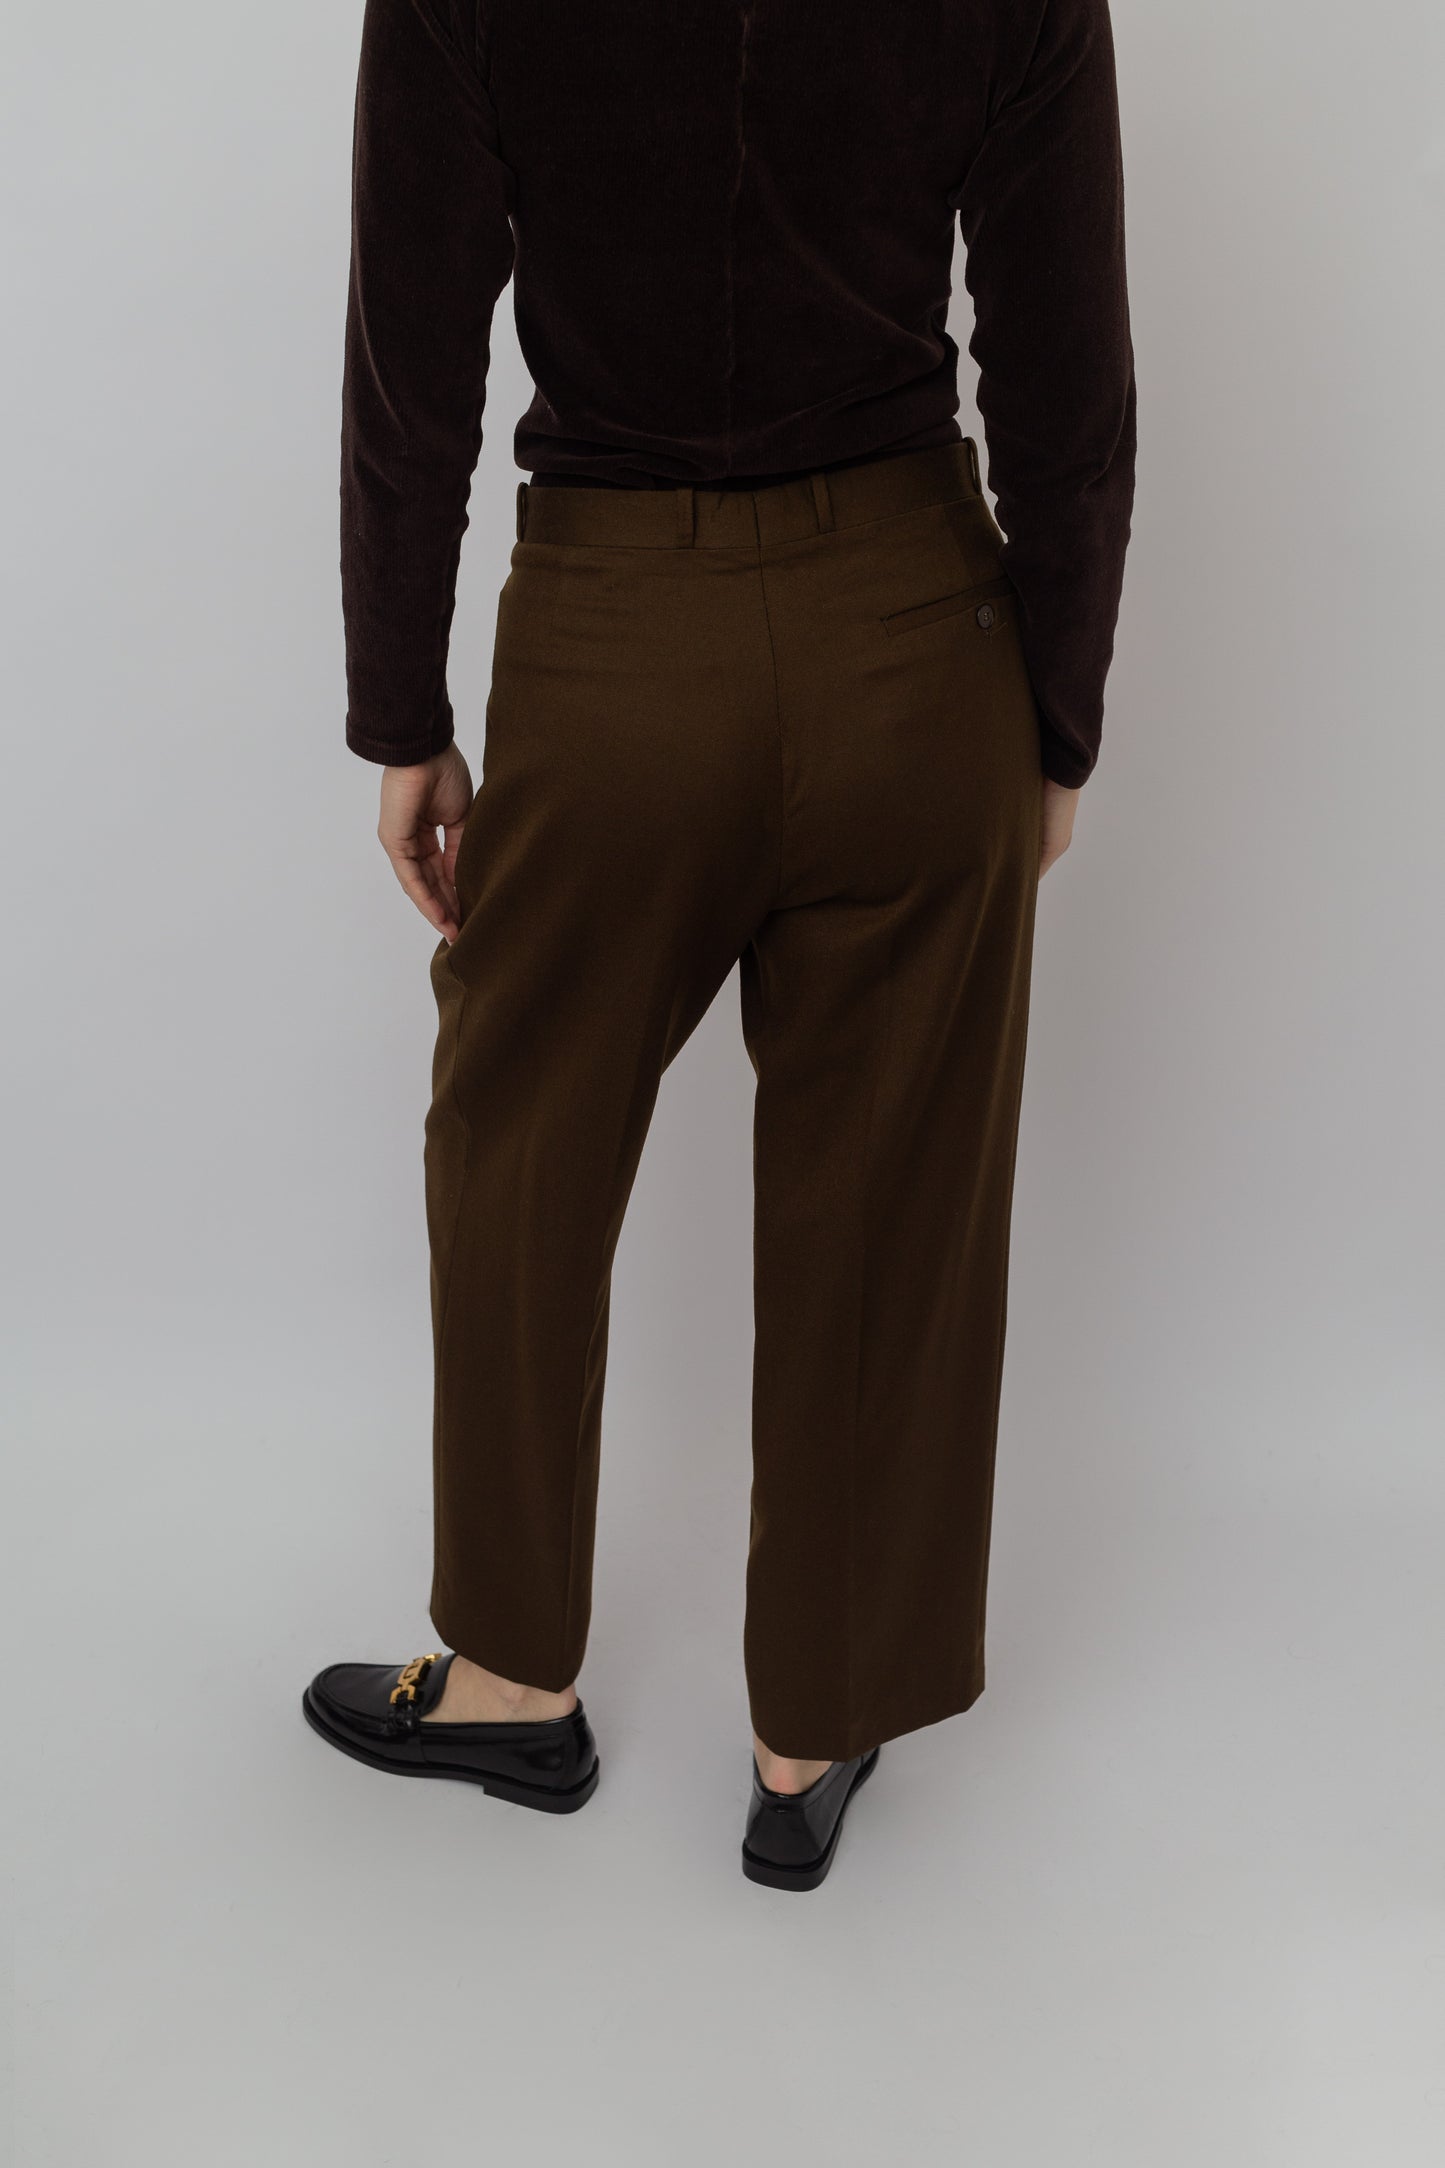 Khaki classic trousers